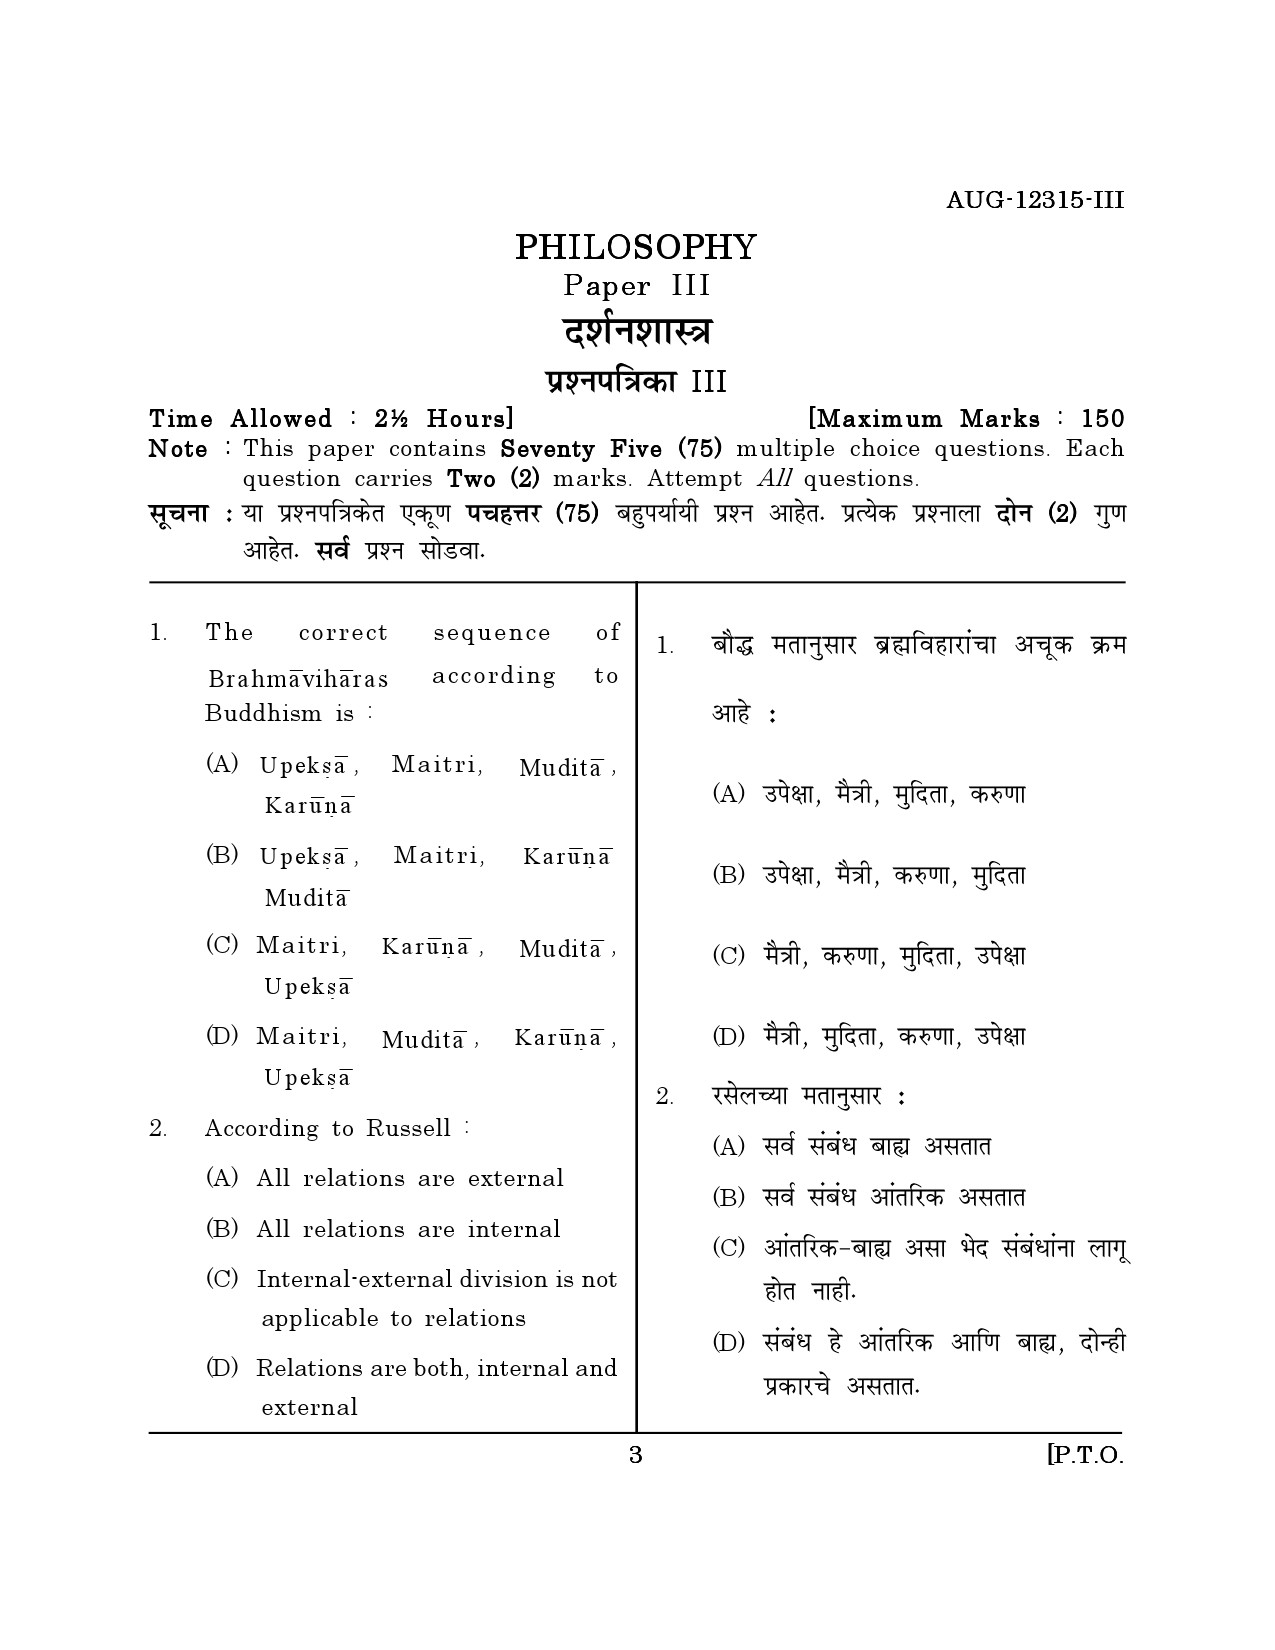 Maharashtra SET Philosophy Question Paper III August 2015 2